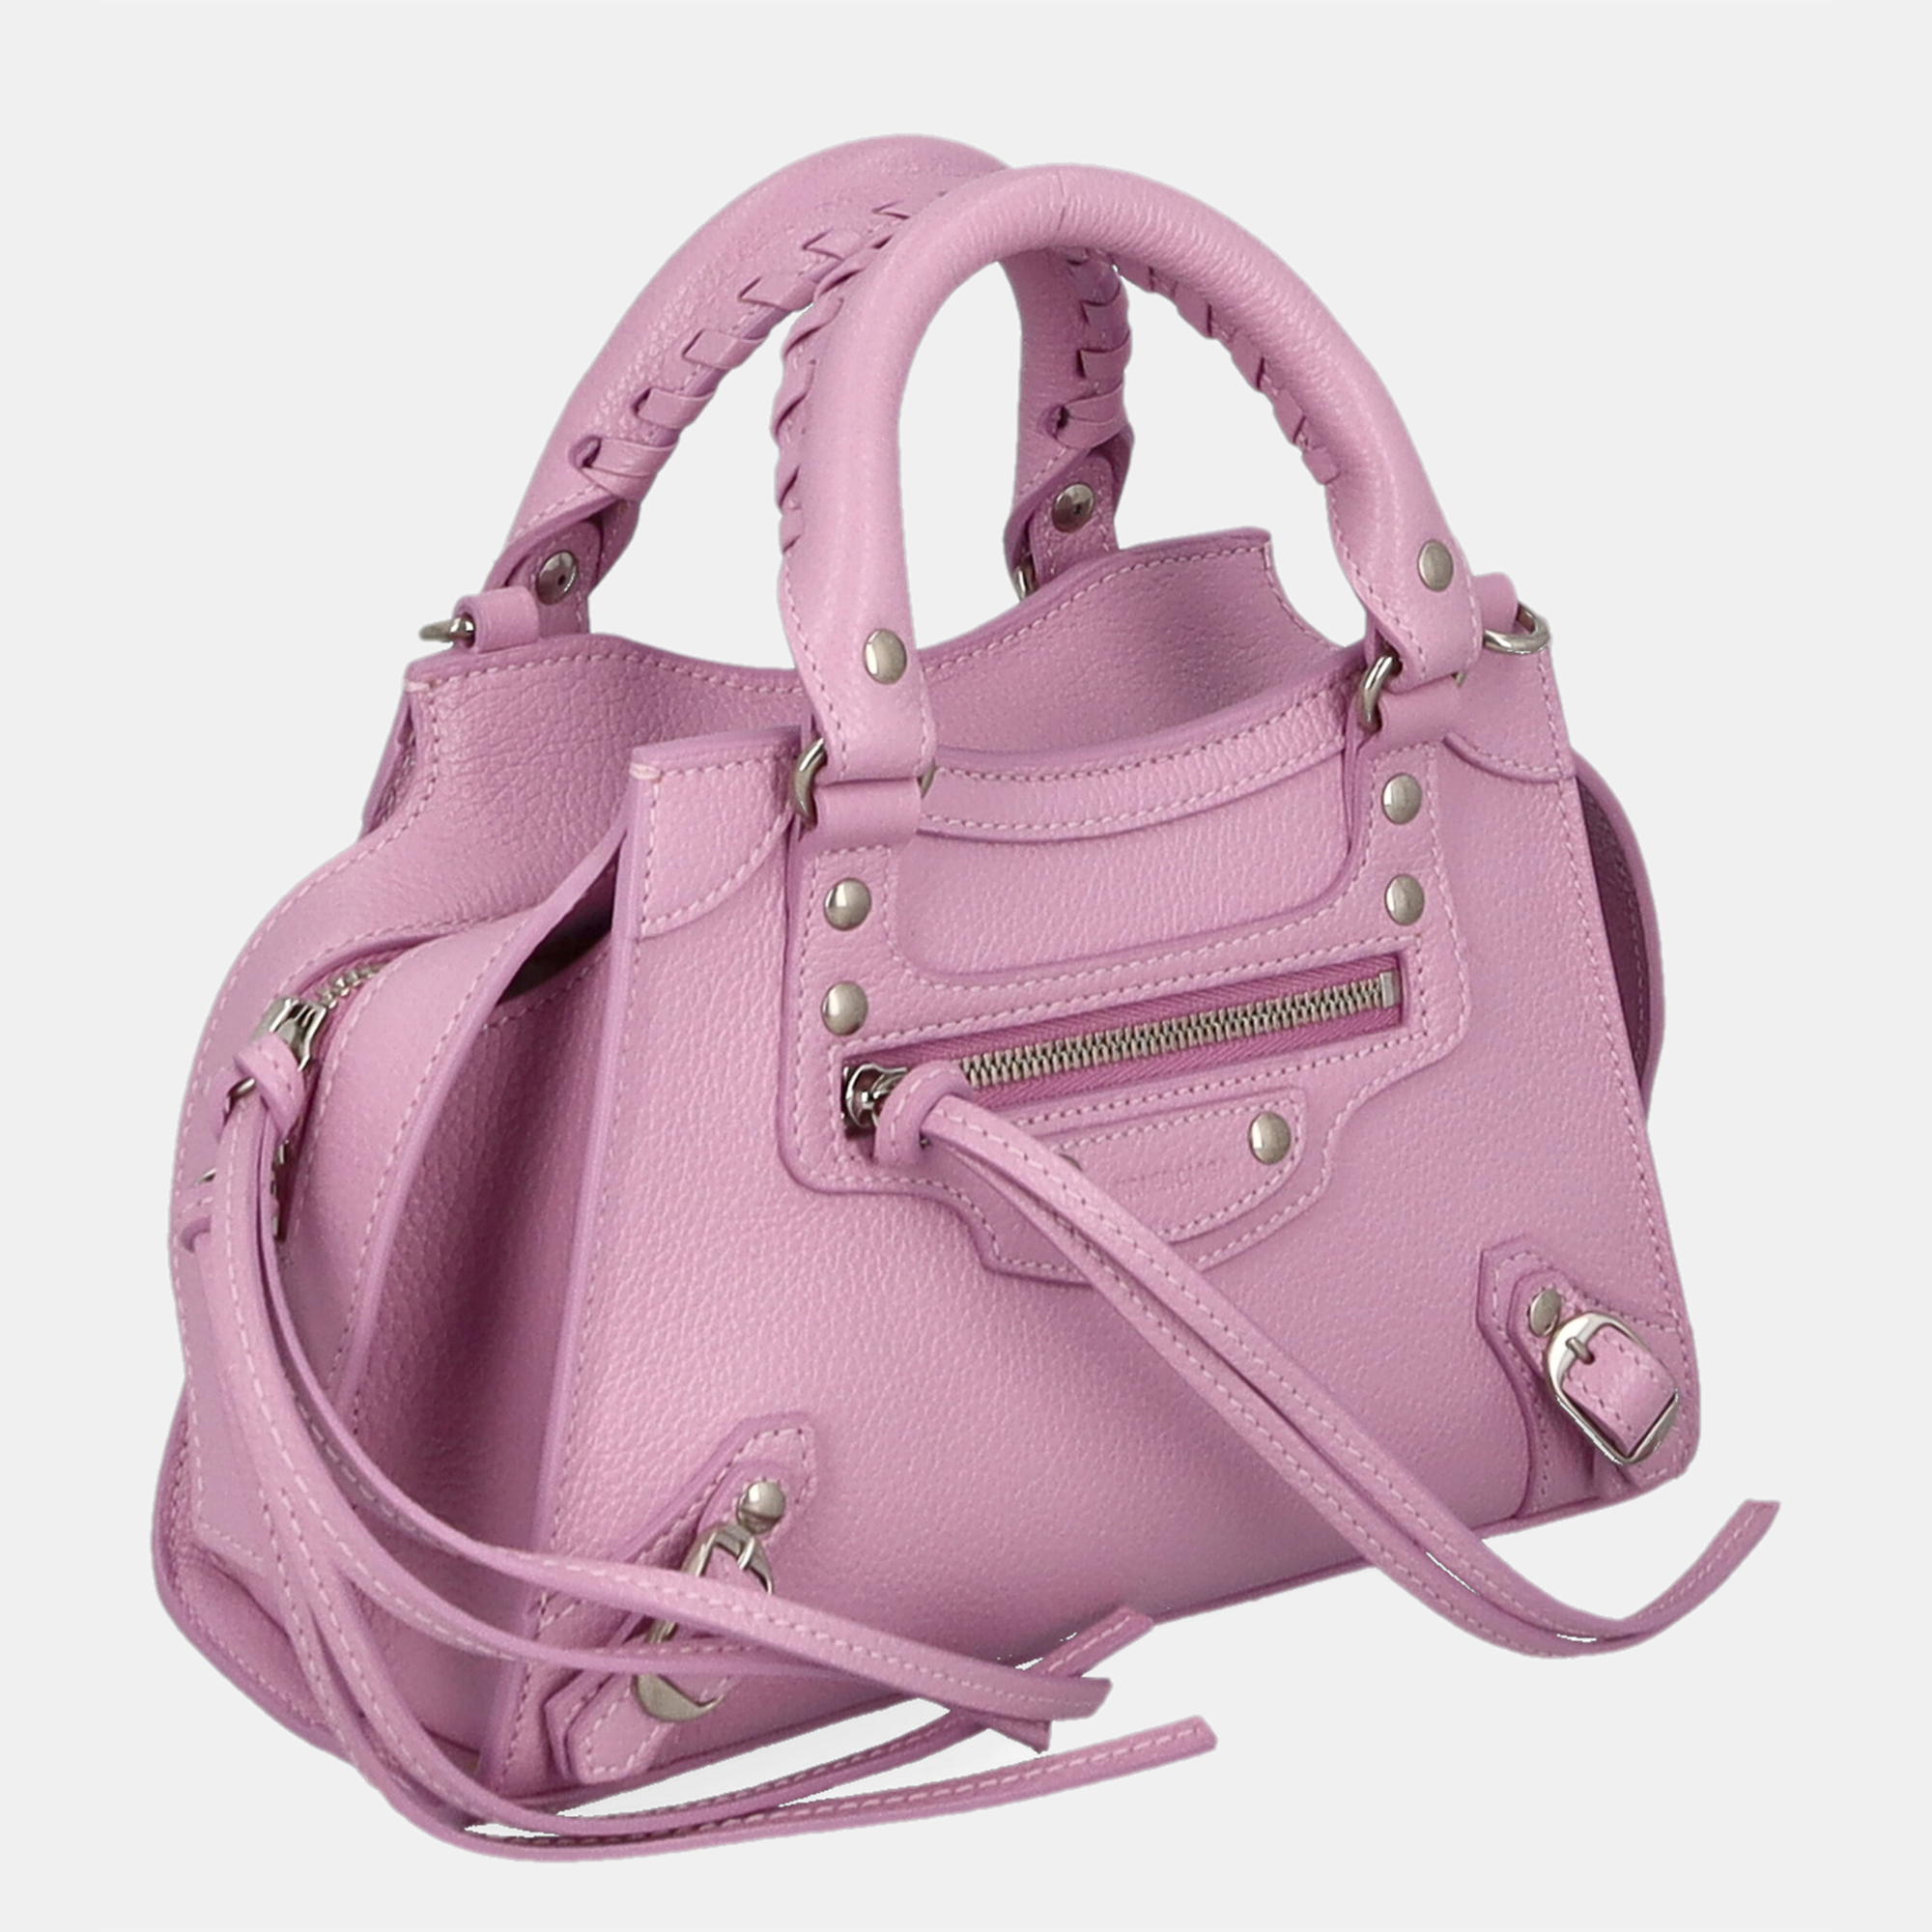 Balenciaga Neo City Mini Women's Leather Shoulder Bag - Purple - One Size